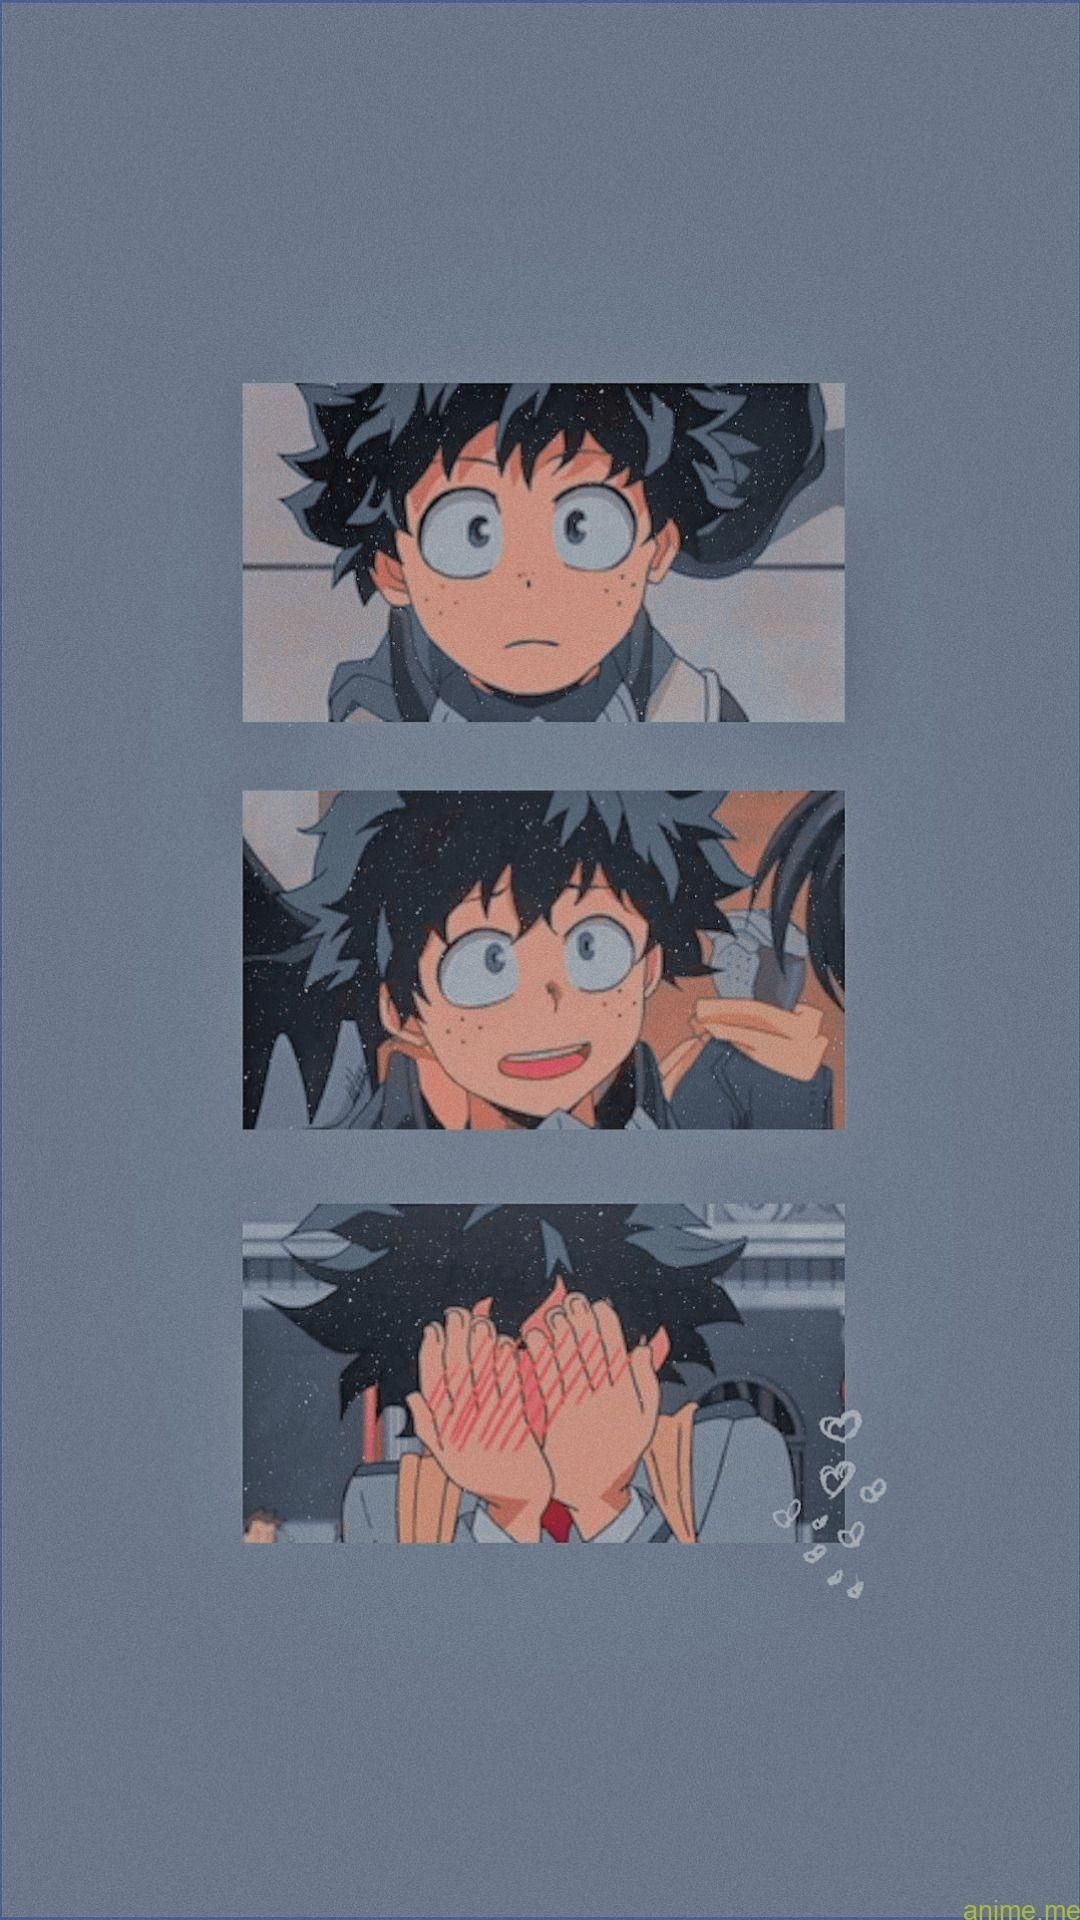 100+] Aesthetic Anime Boy Icon Wallpapers